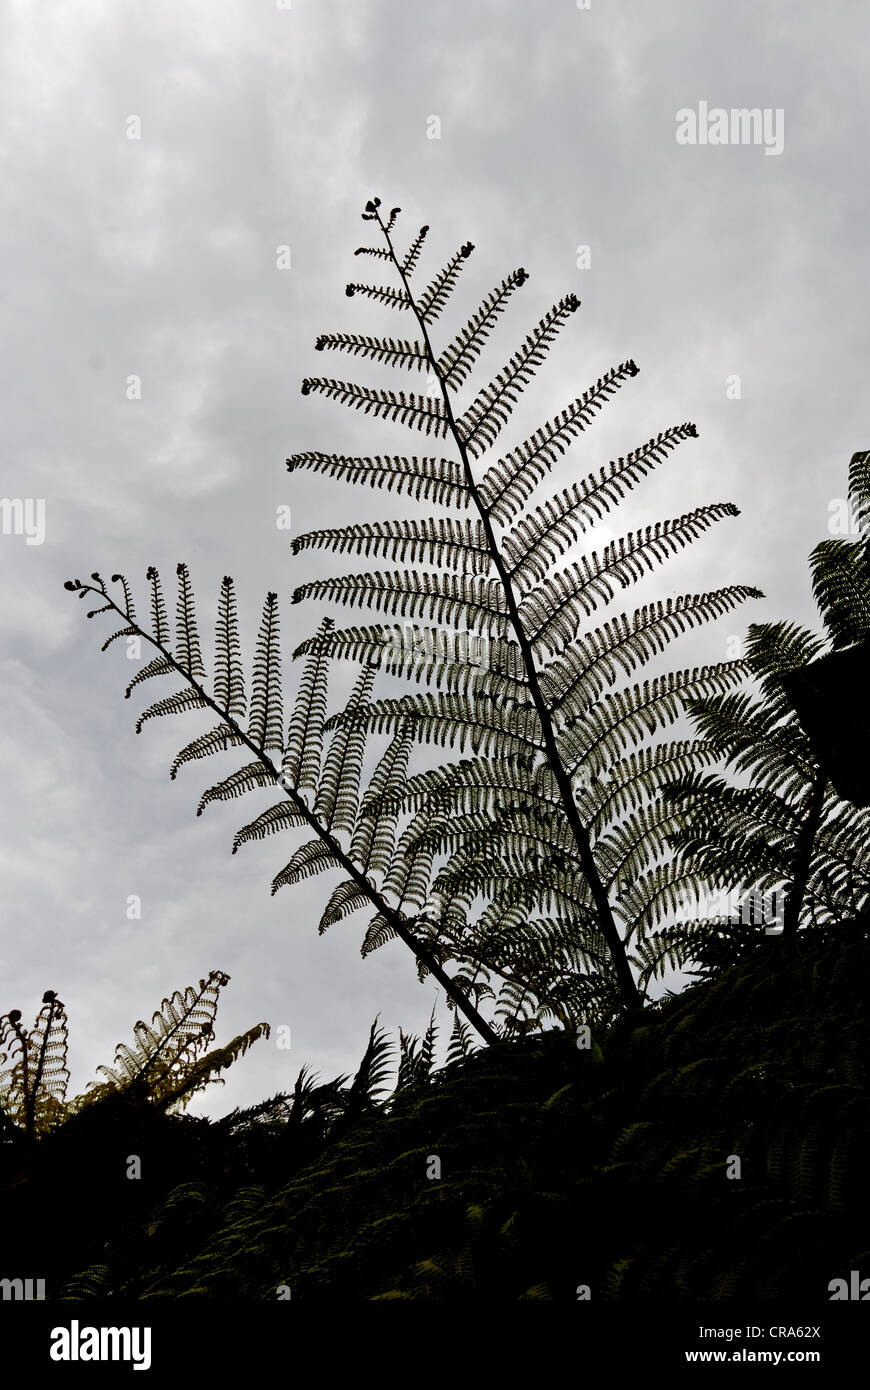 New Zealand Otago Peninsula South Island silhouette fern tree Stock Photo